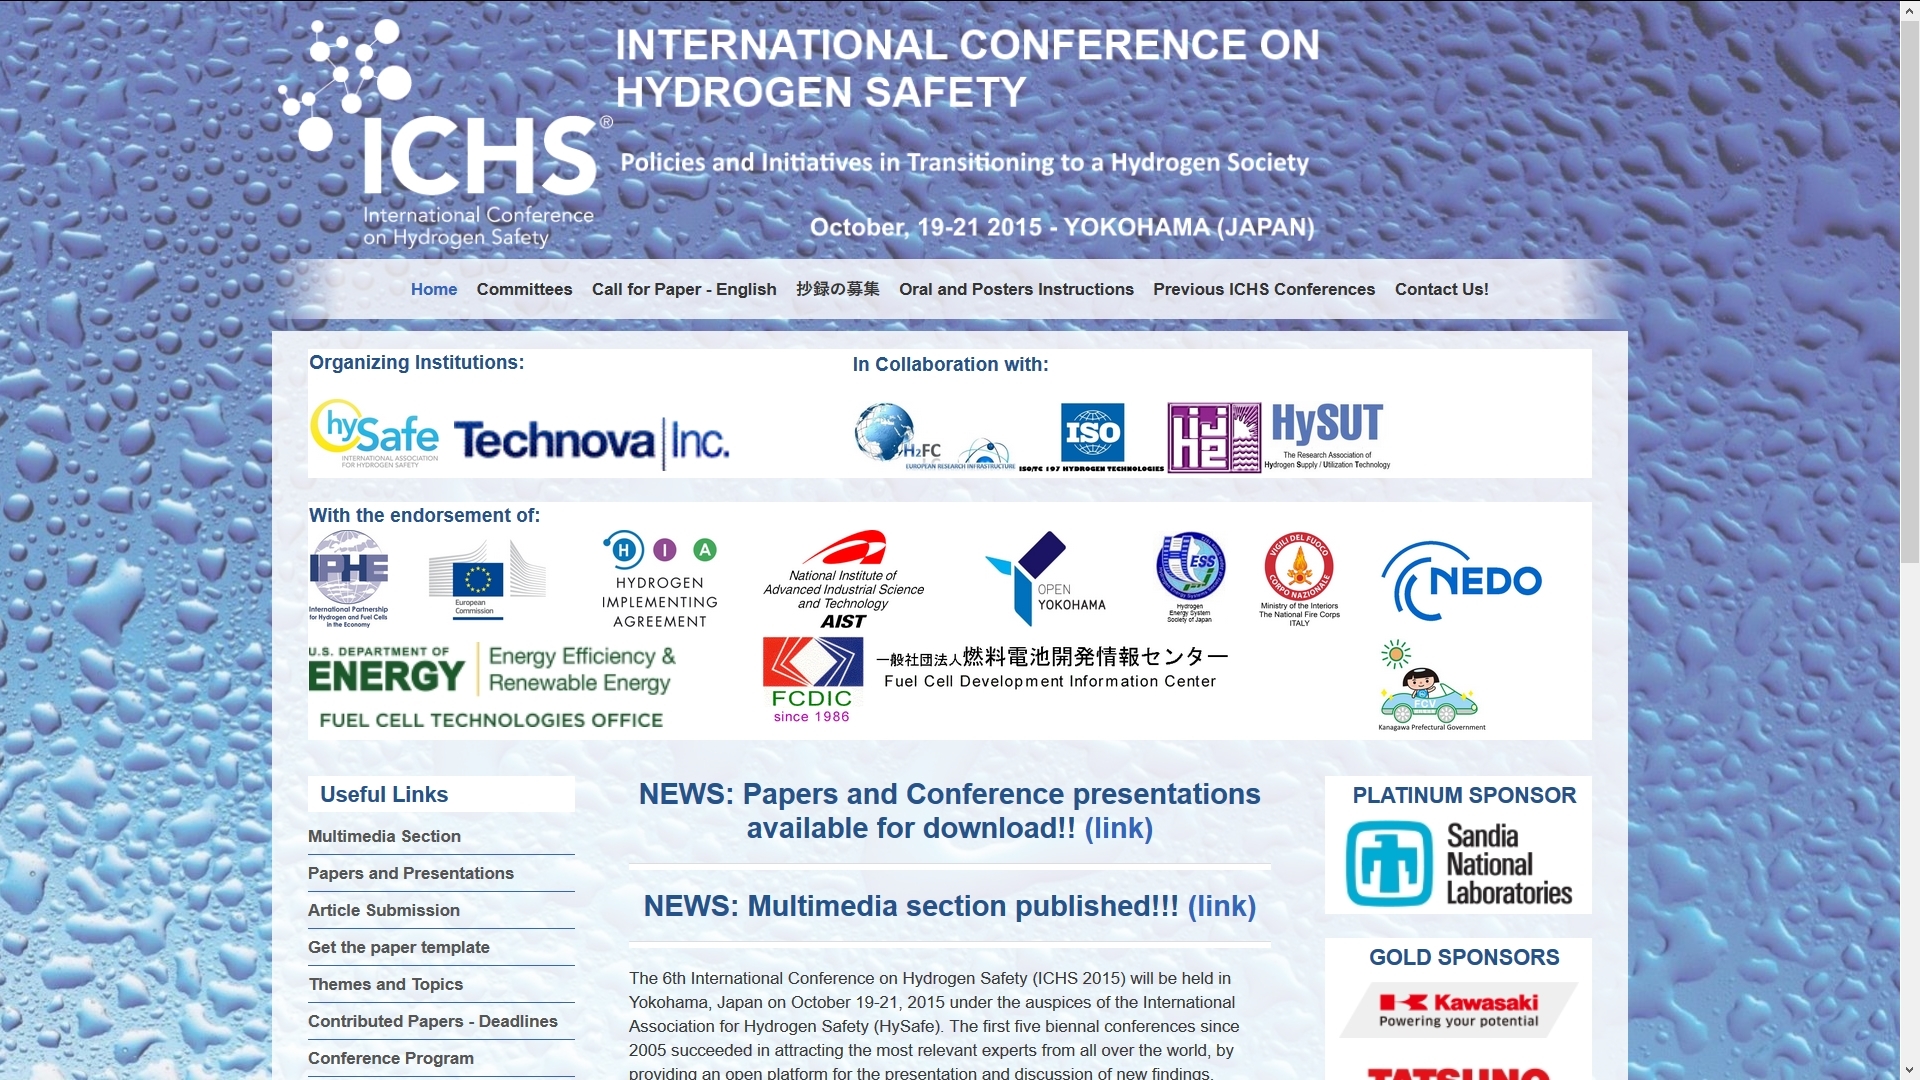 6th International Conference on Hydrogen Safety